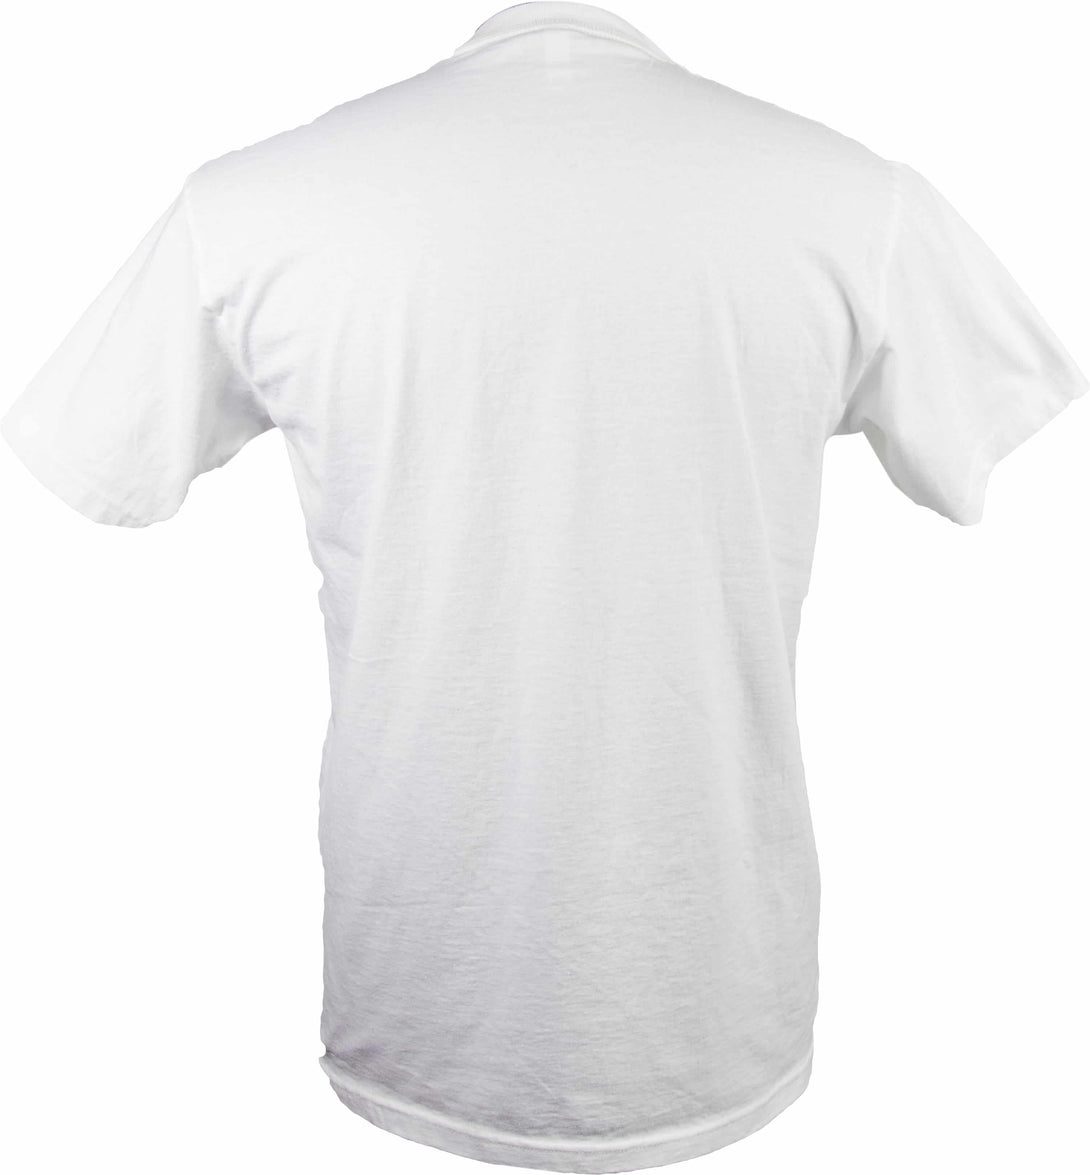 Reef bass fishing t-shirt in White back